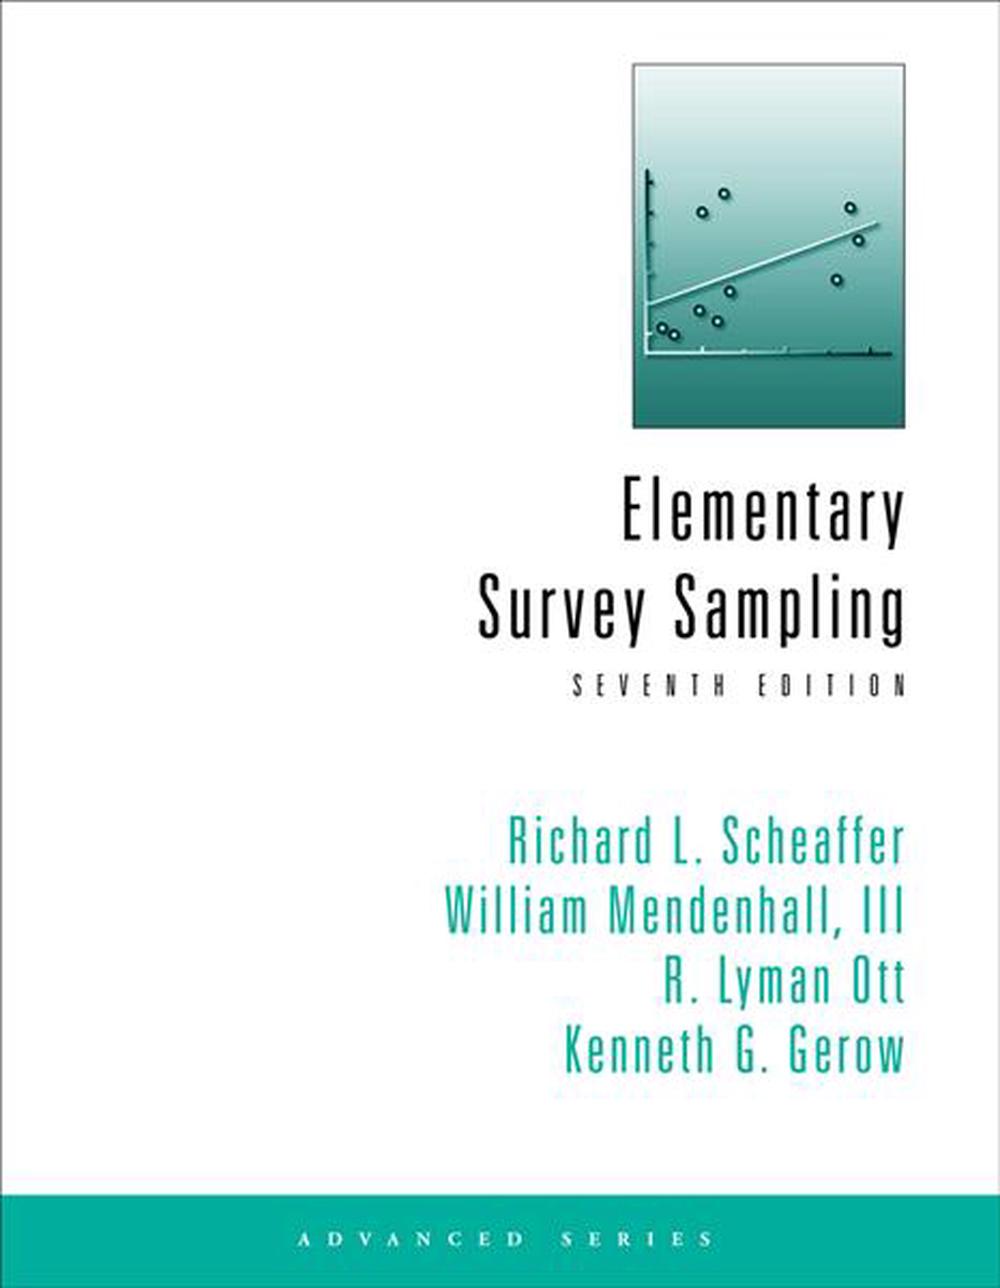 Elementary Survey Sampling by Richard L. Scheaffer (English) Hardcover Book Free 9780840053619